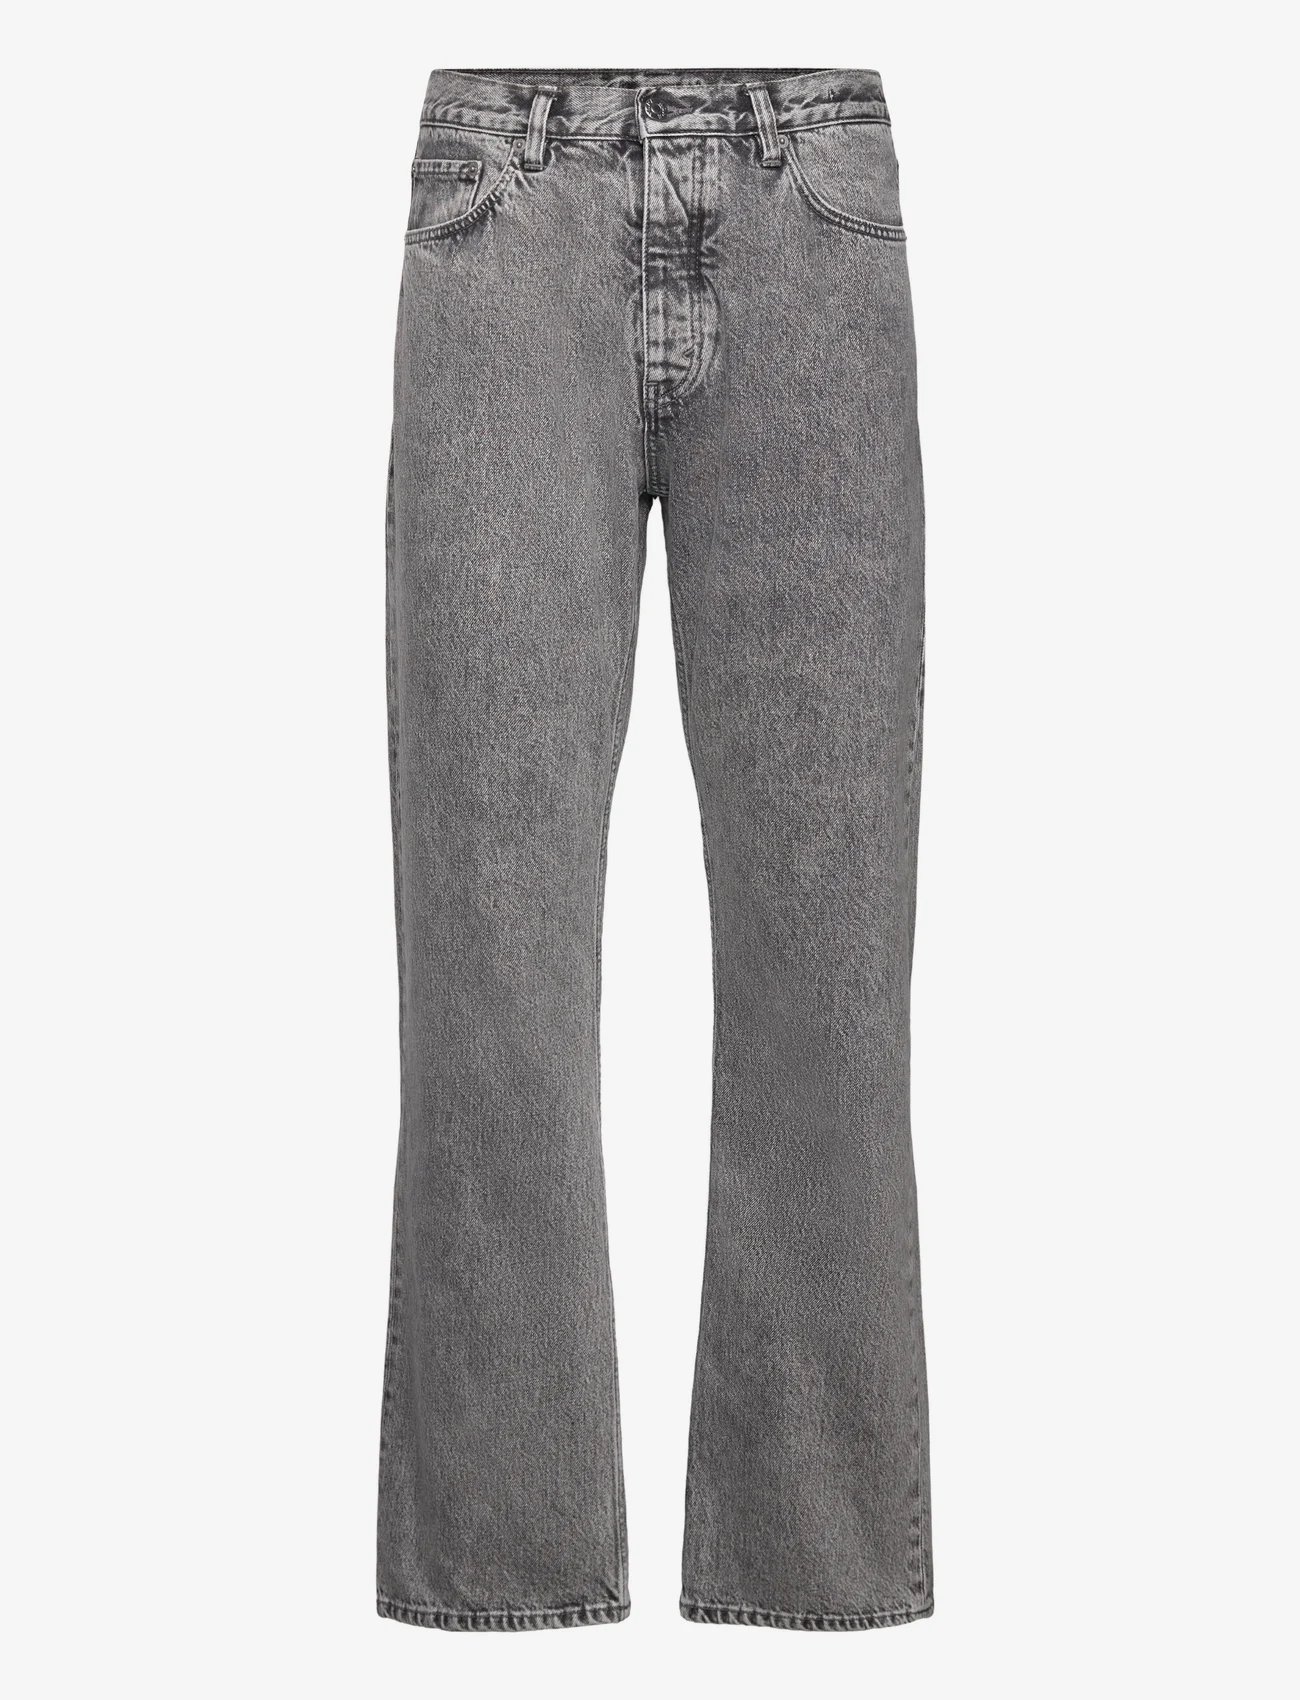 Hope - Rush Jeans Mid Grey Stone 2 - regular jeans - mid grey stone 2 - 0